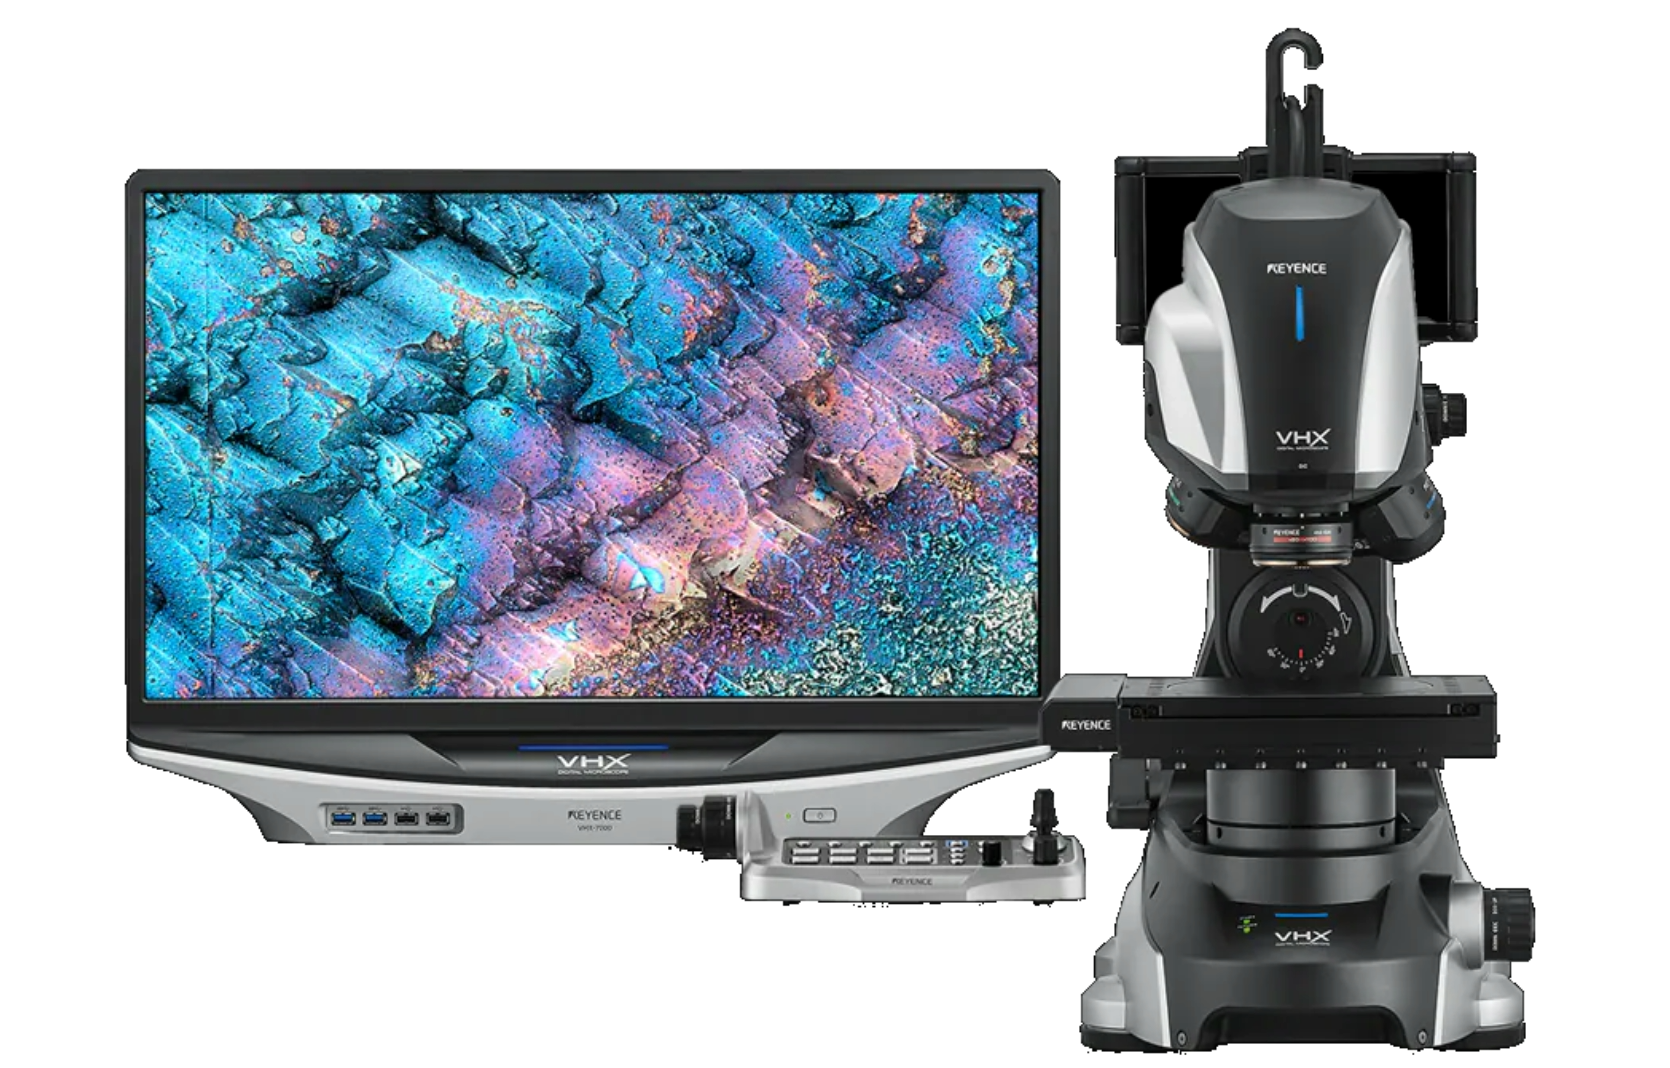 Keyence VHX-7000 Microscope | Core Facilities